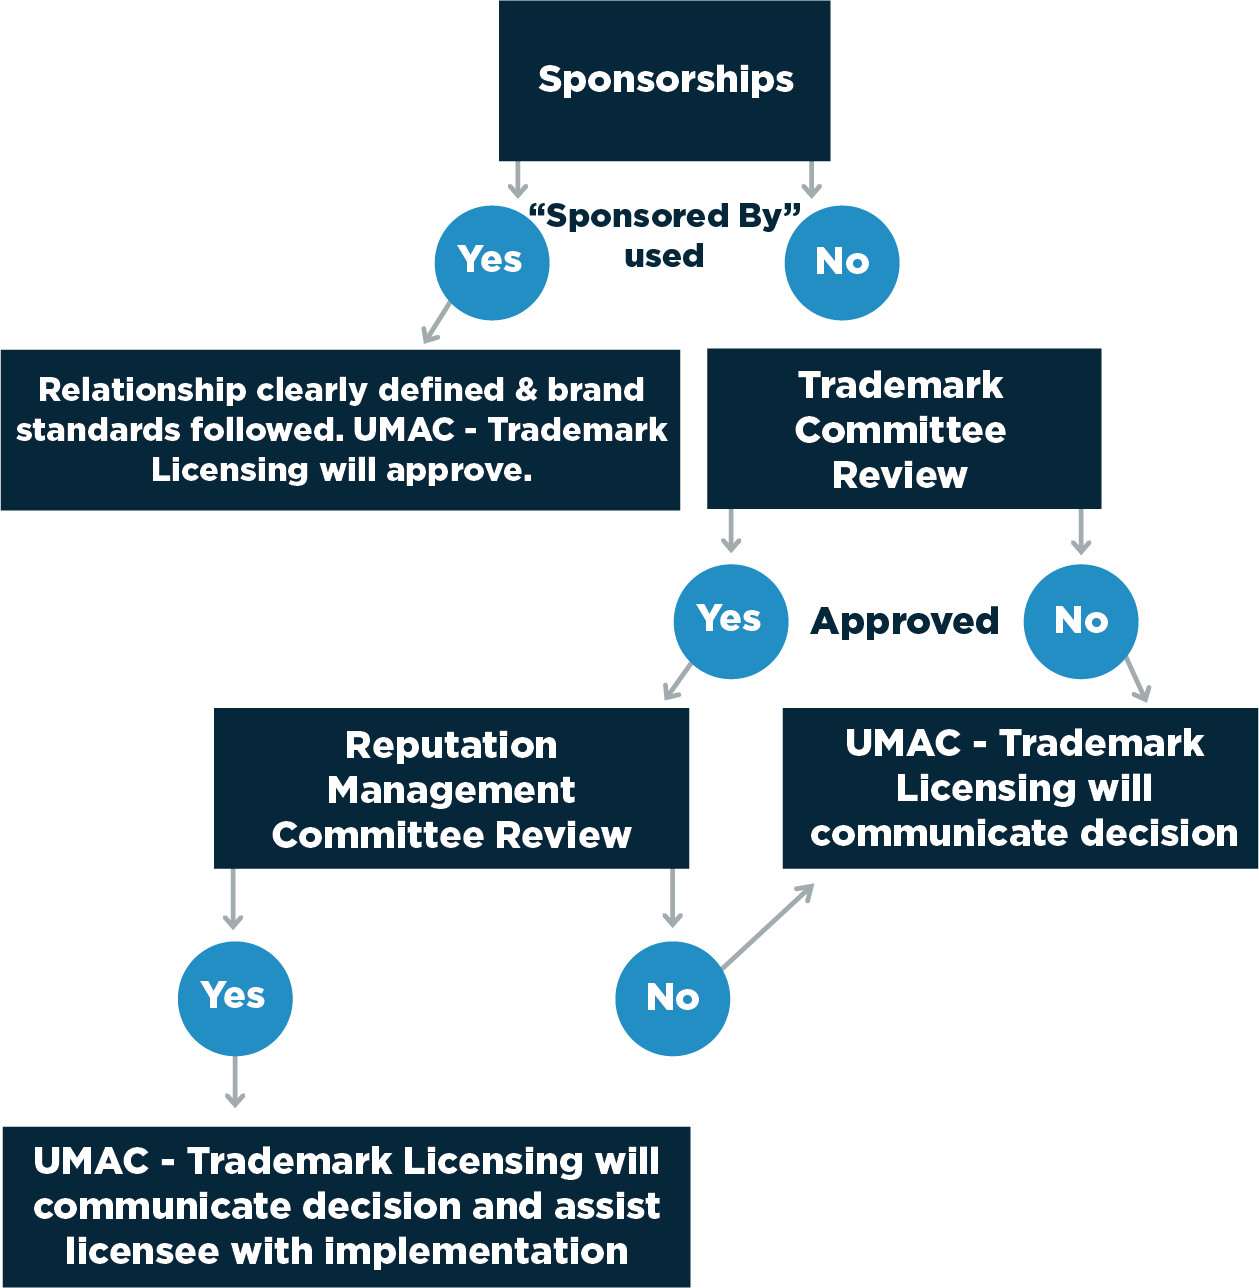 sponsorships review process flow chart